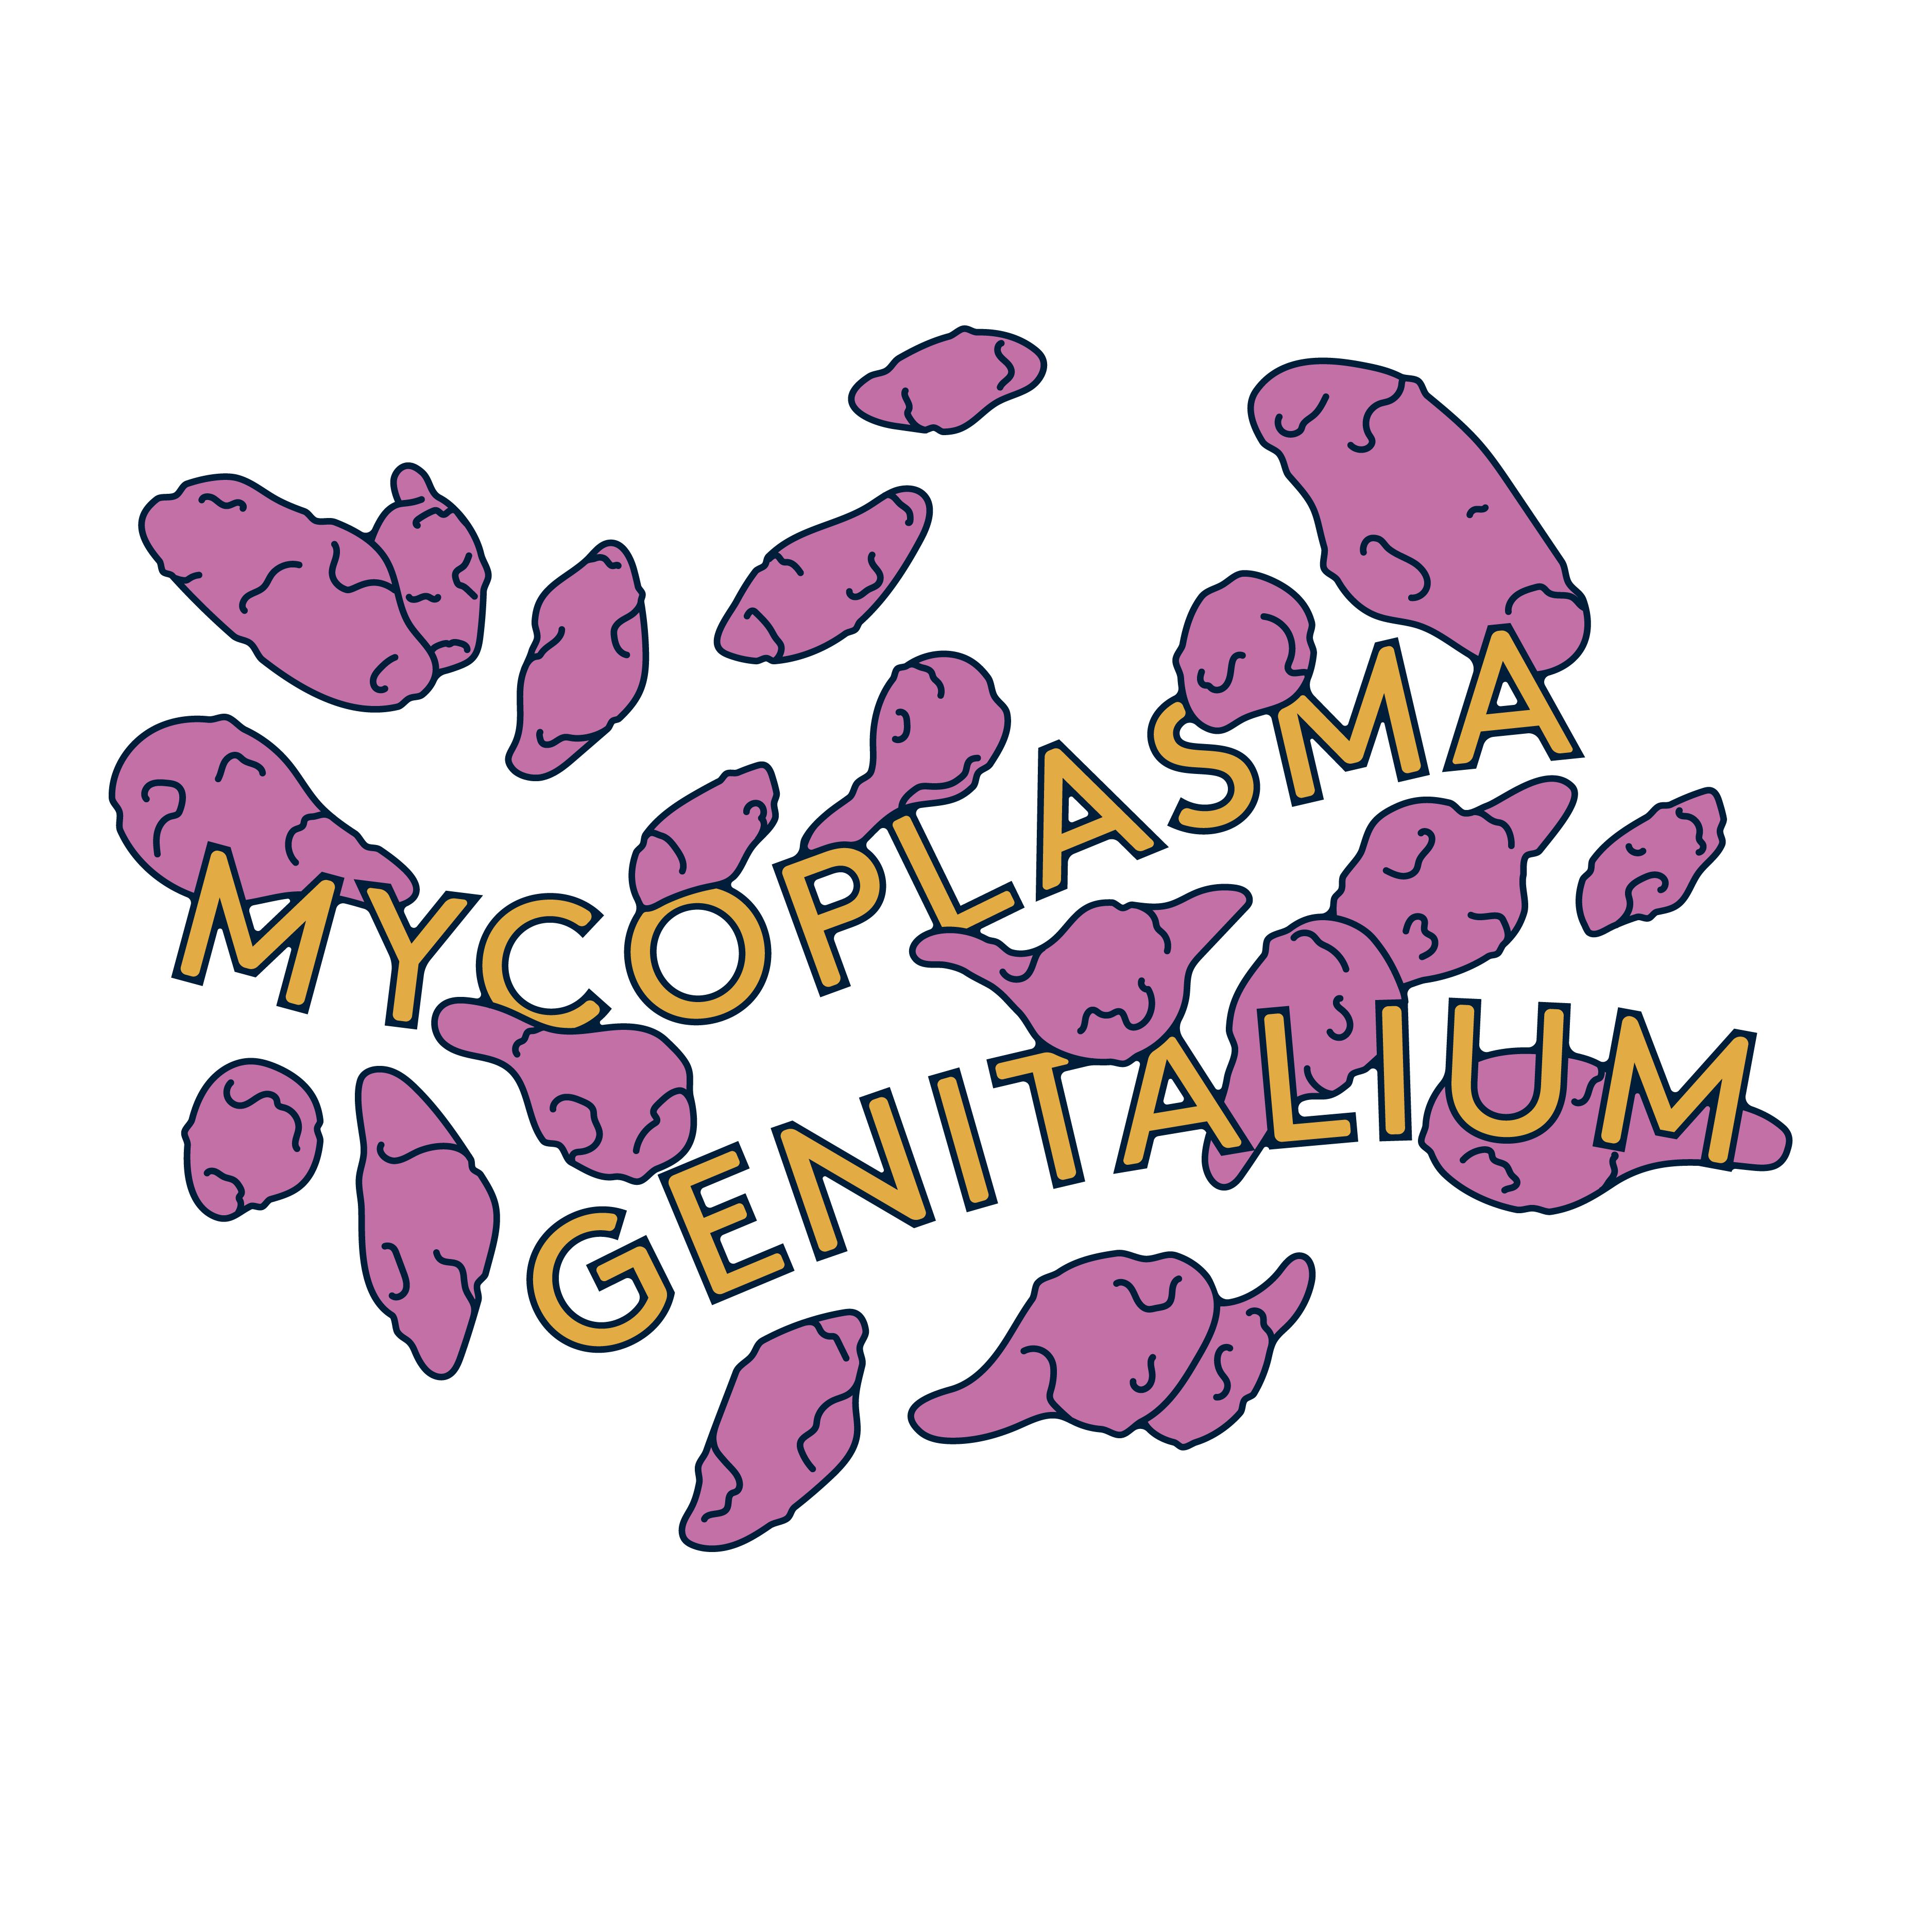 Mycoplasma genitalium (MG)